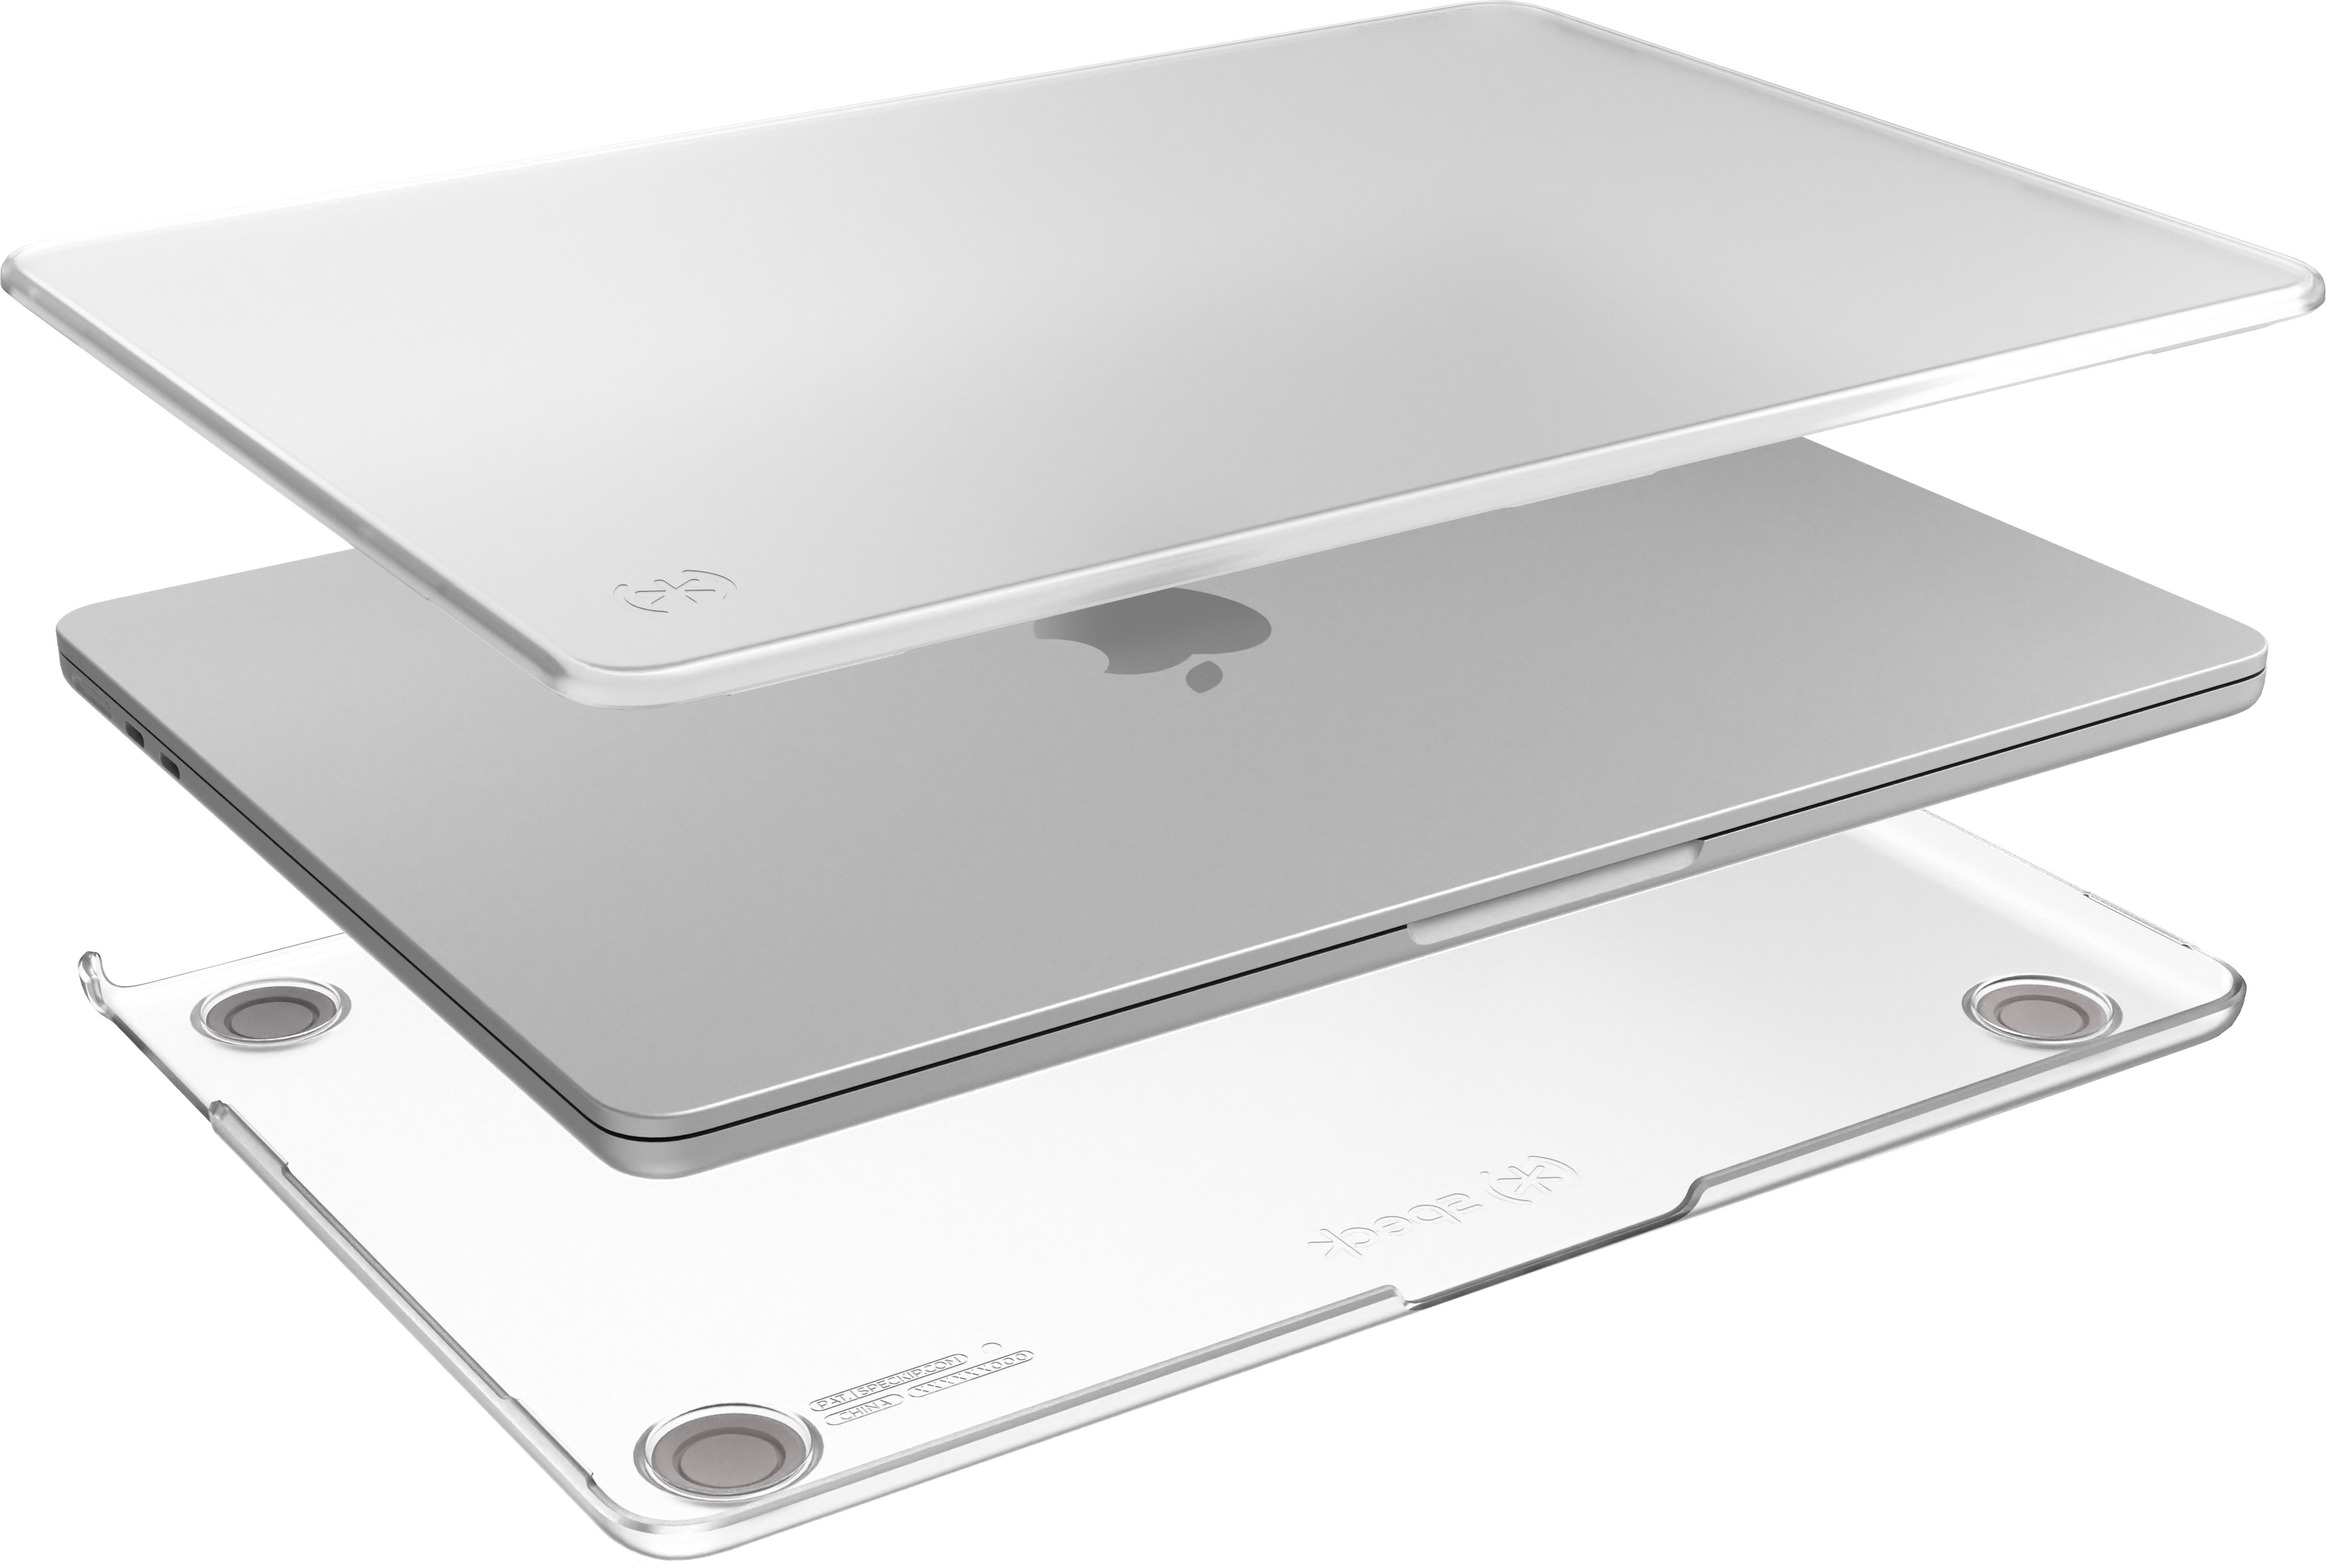 SPECK Smartshell MacBook Air M2 150225-9992 (2022) Clear